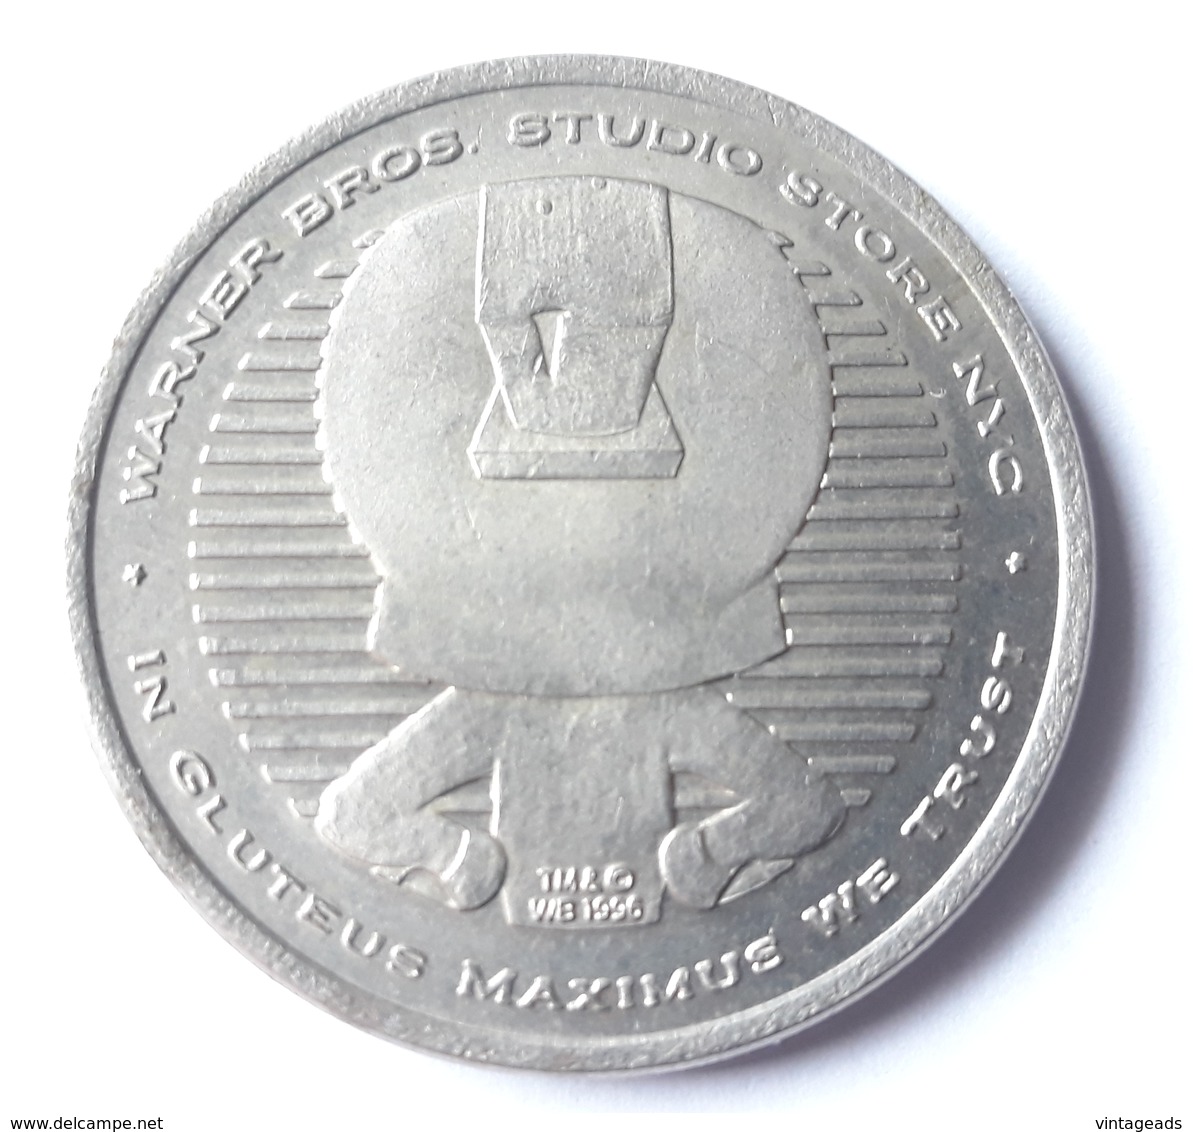 MU001 Token Warner Bros Studios 1996, The Republic Of Mars - Souvenir-Medaille (elongated Coins)